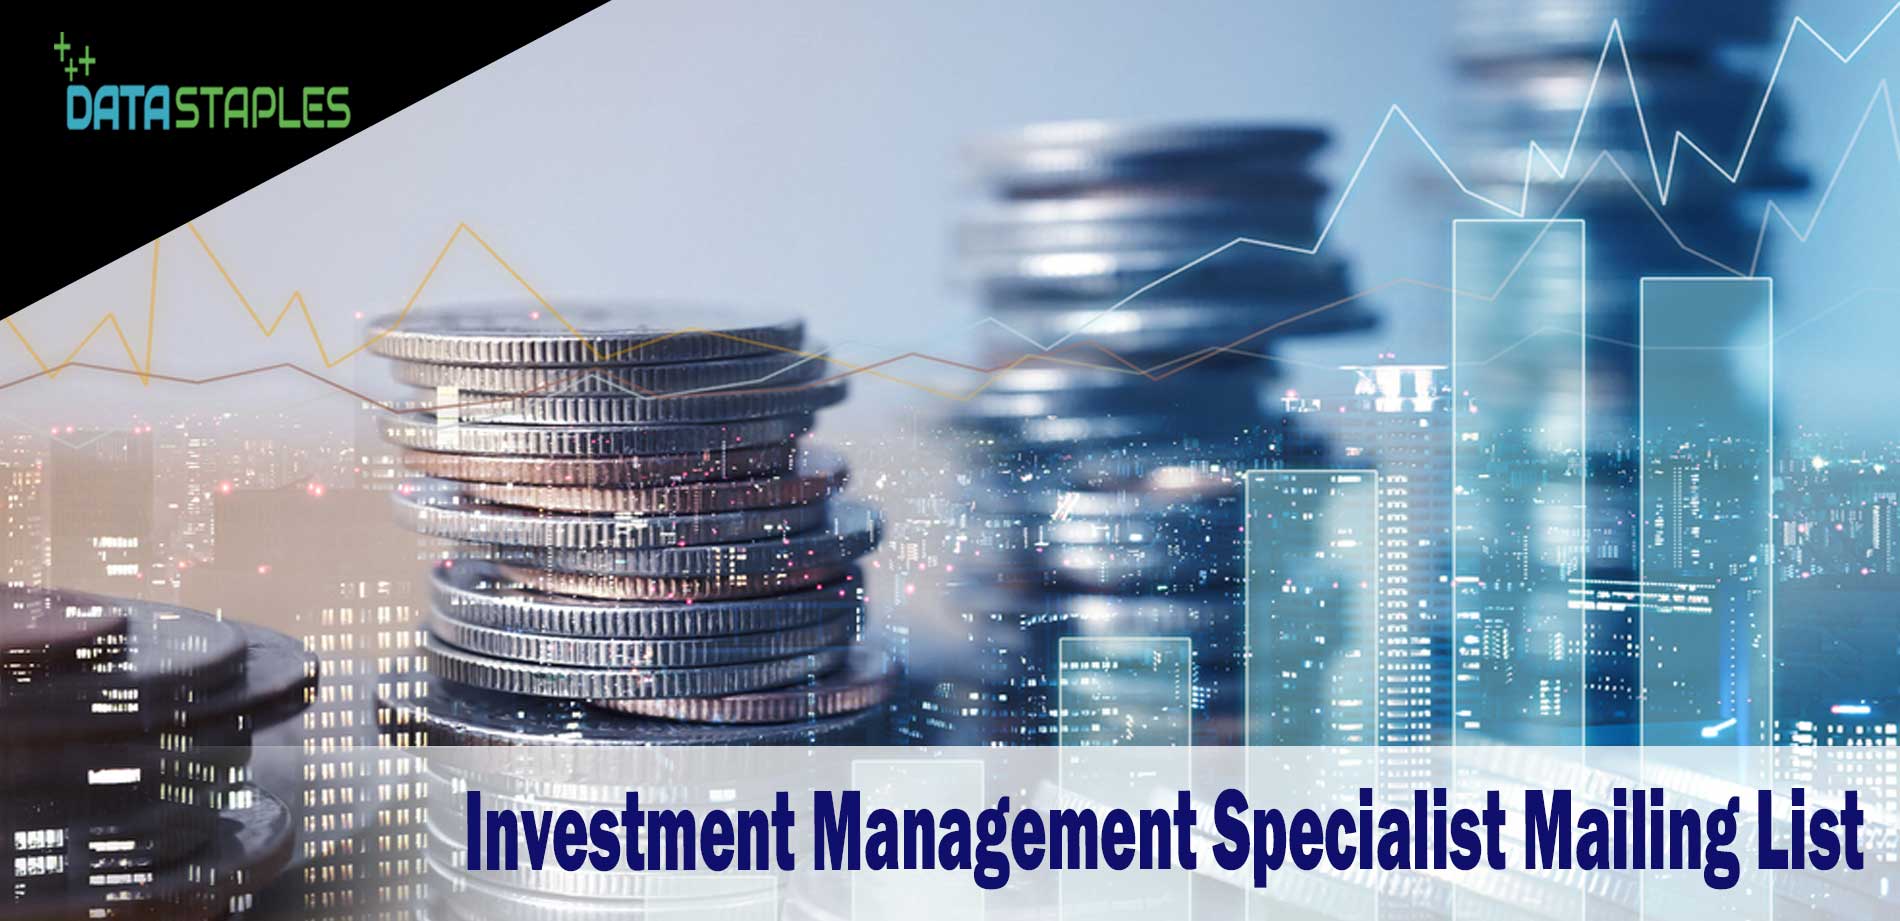 Investment Management Specialist Mailing List | DataStaples